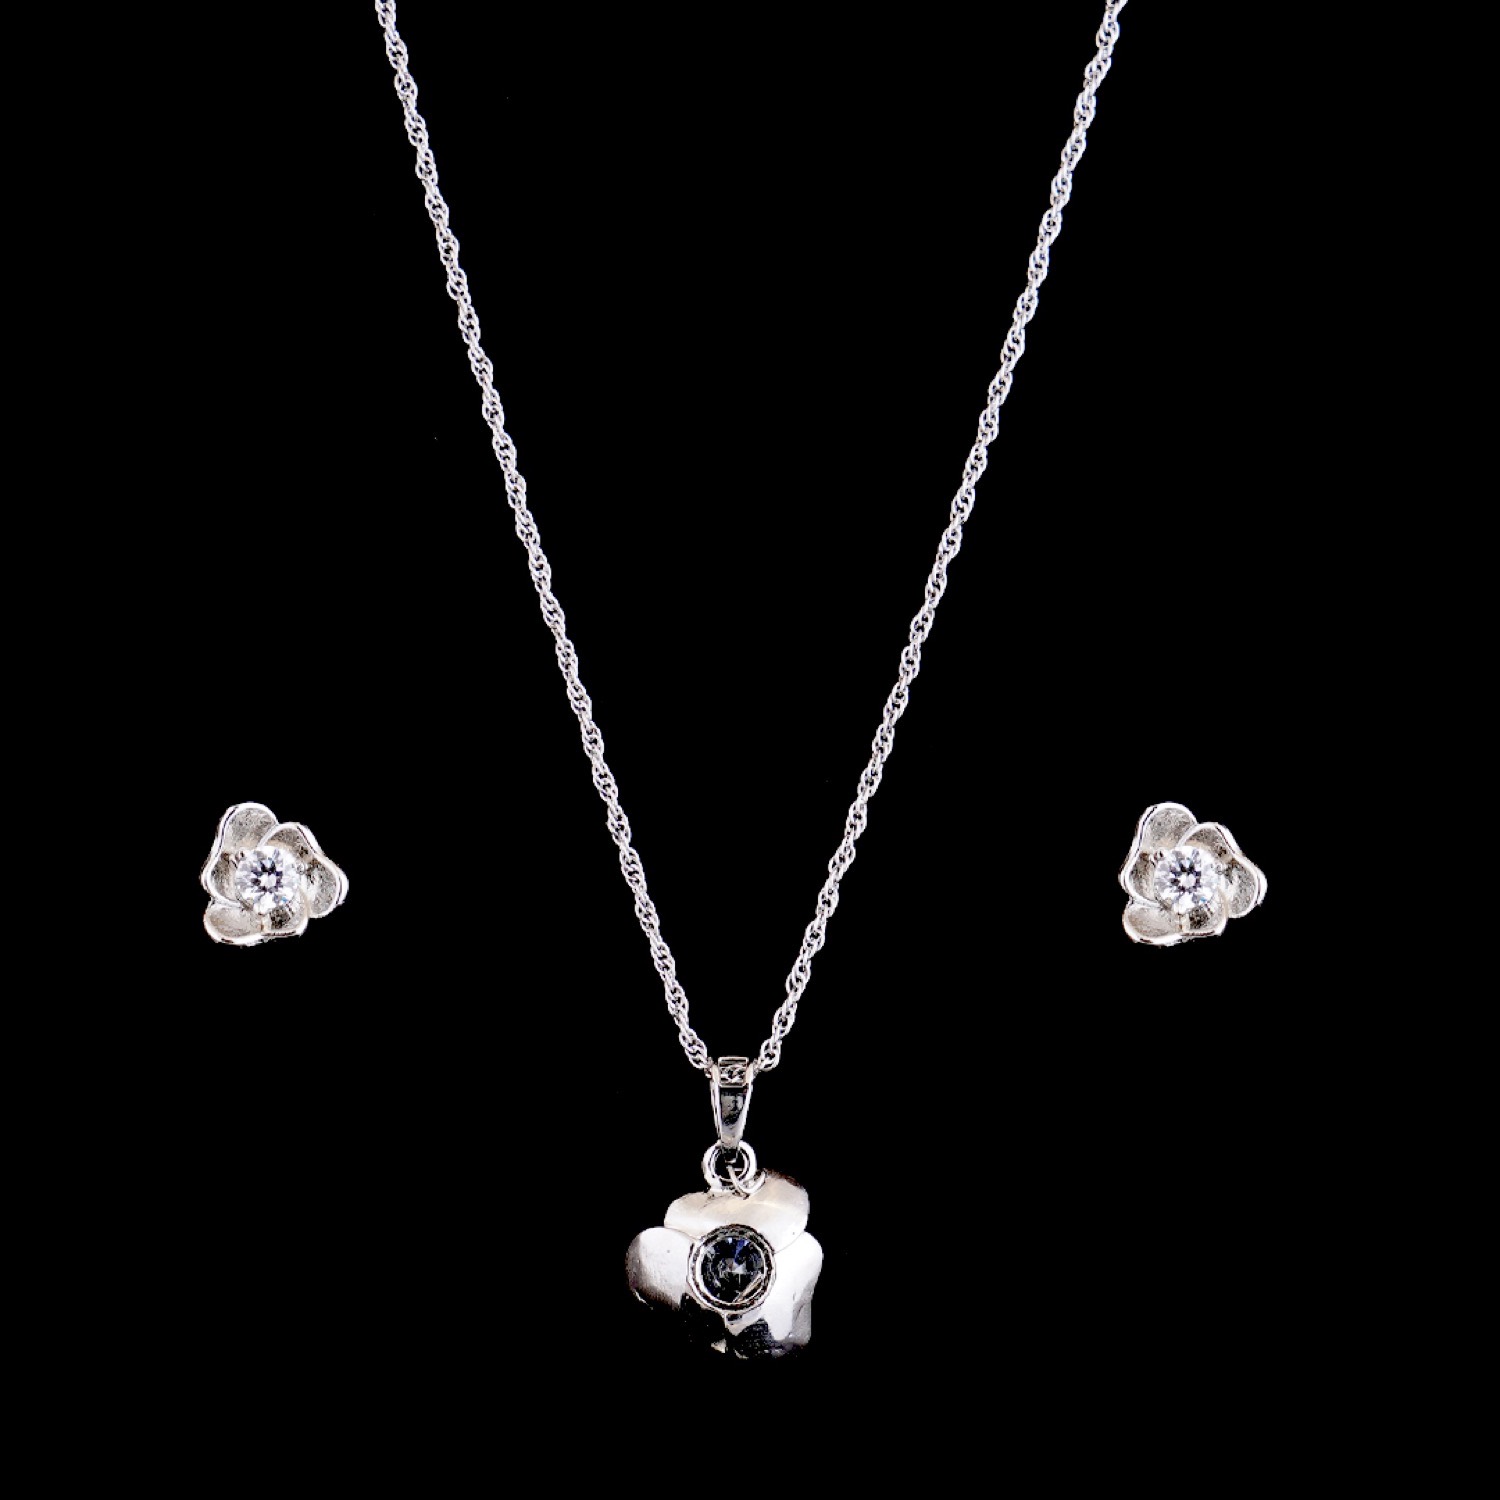 varam_swarovski_white_stone_floral_design_silver_chain_with_earrings_4-1